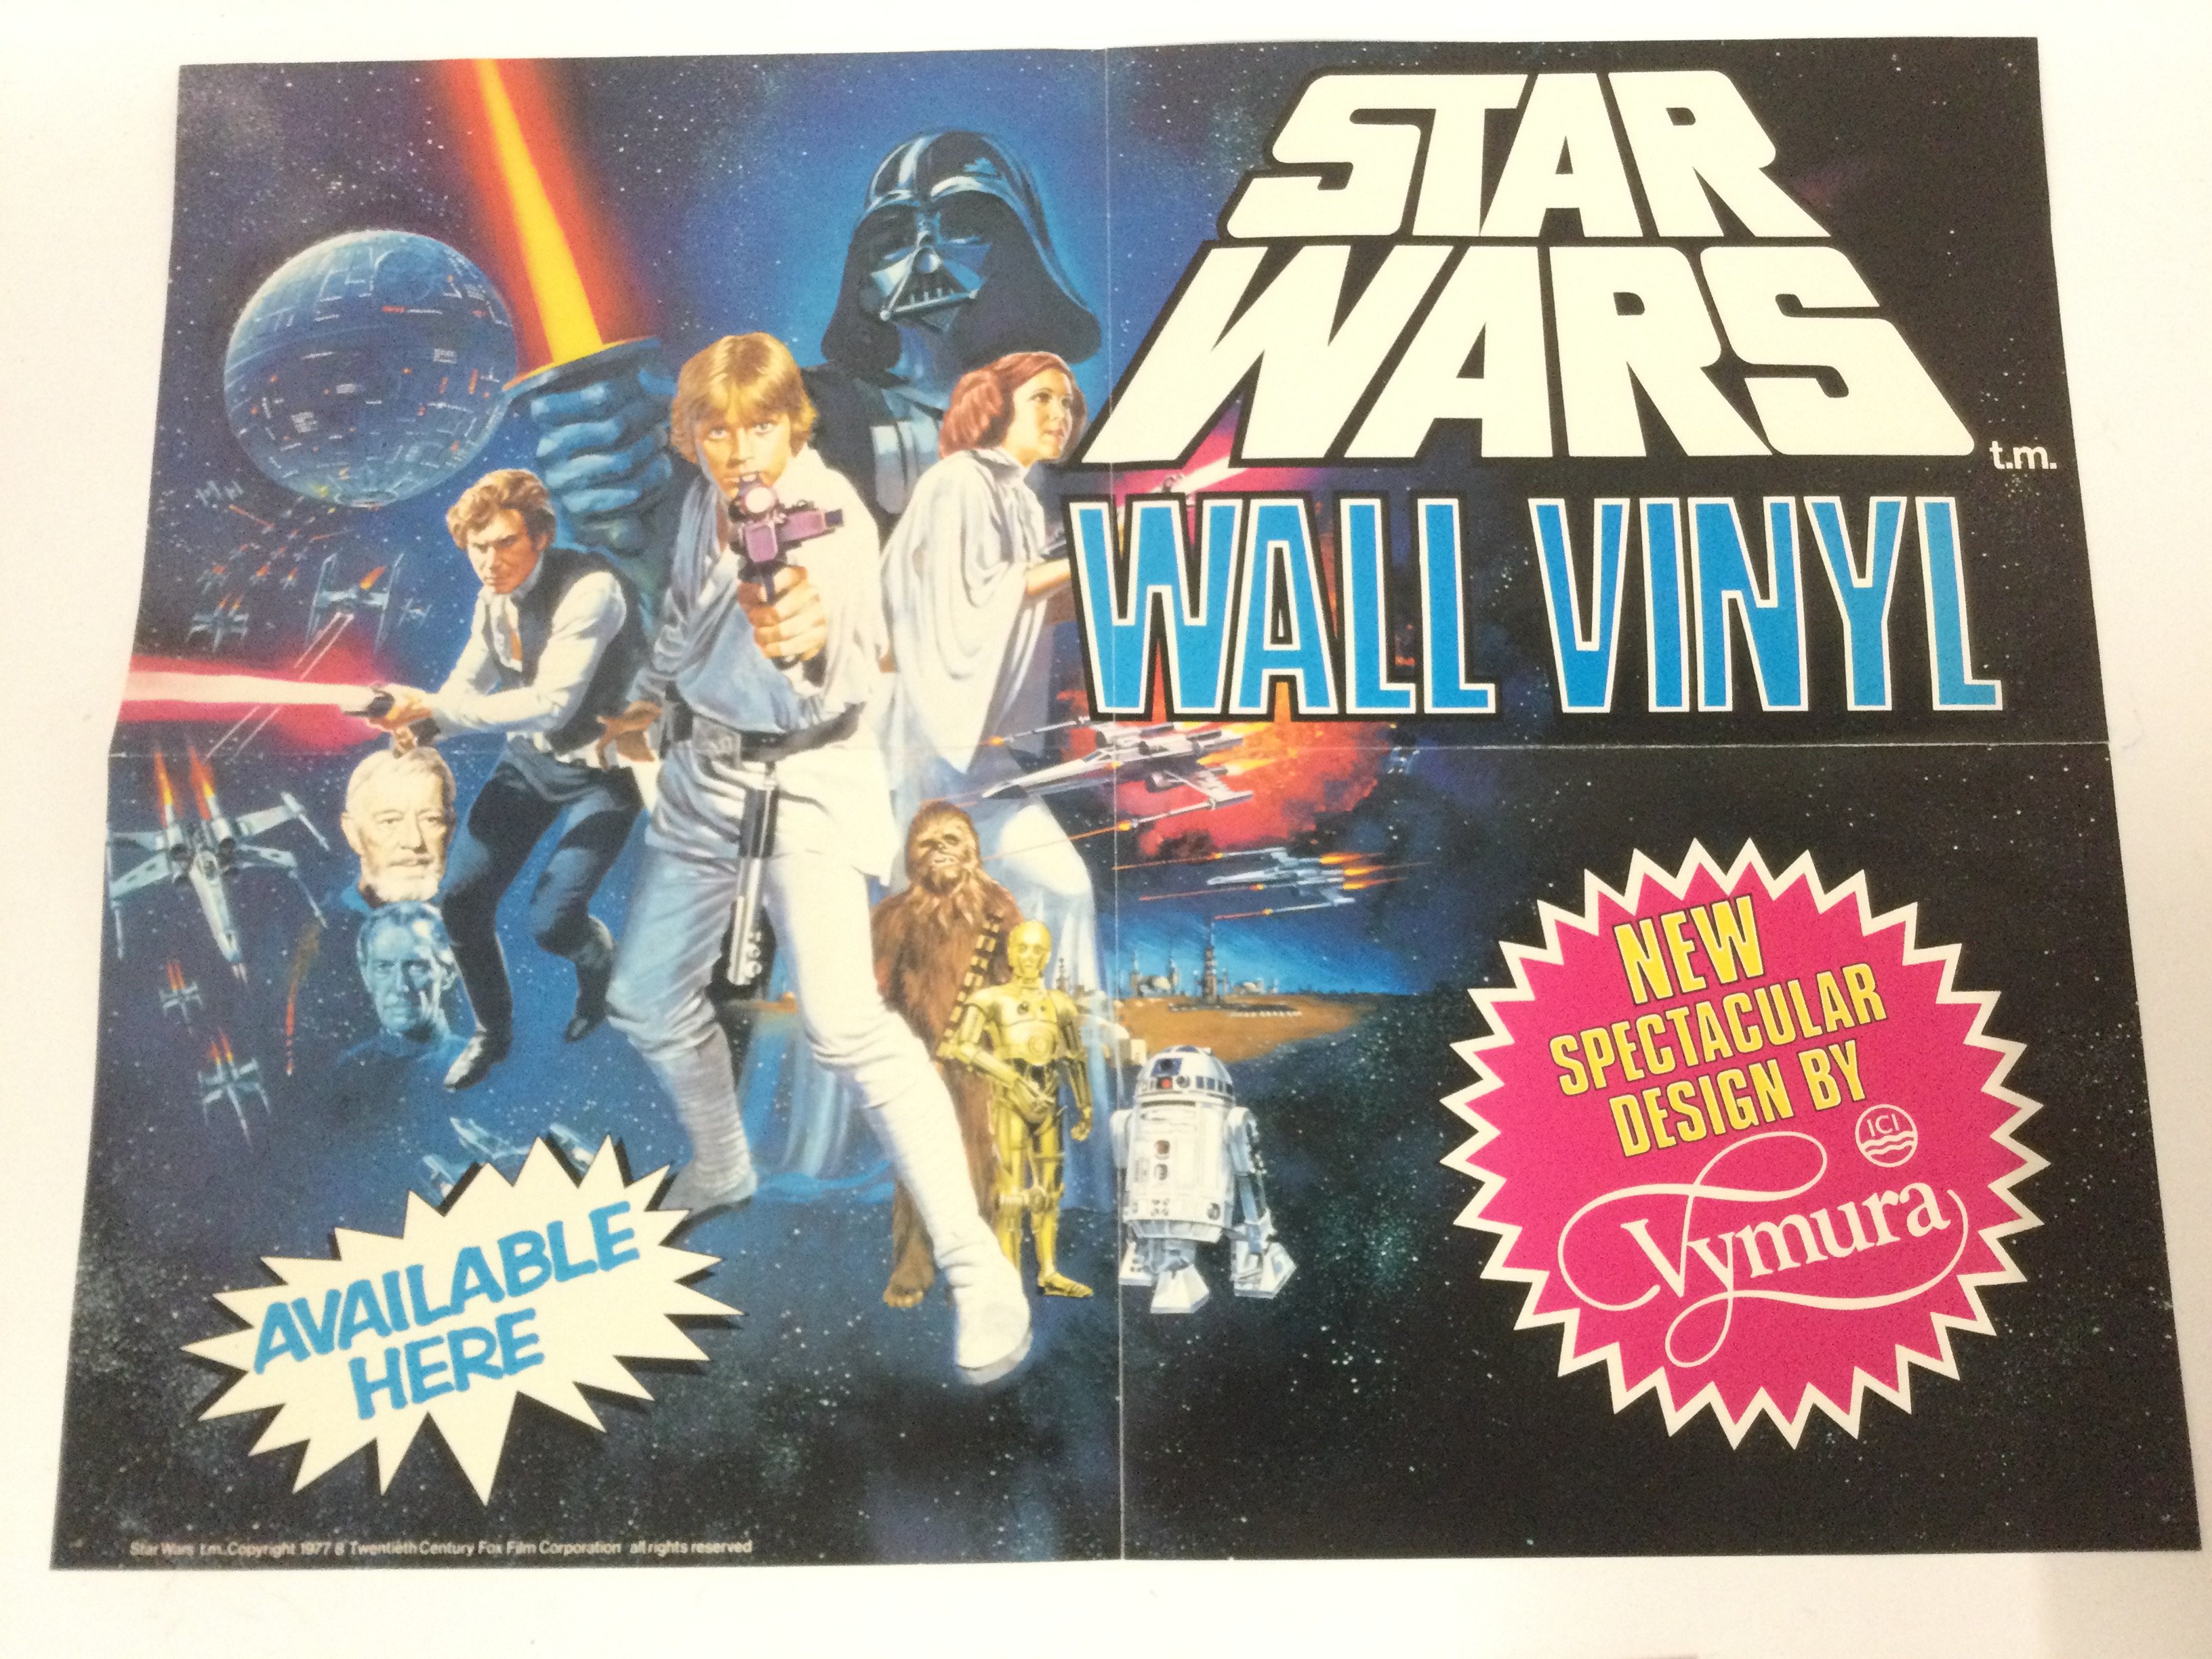 A rare Star Wars wall vinyl advertising poster, ap